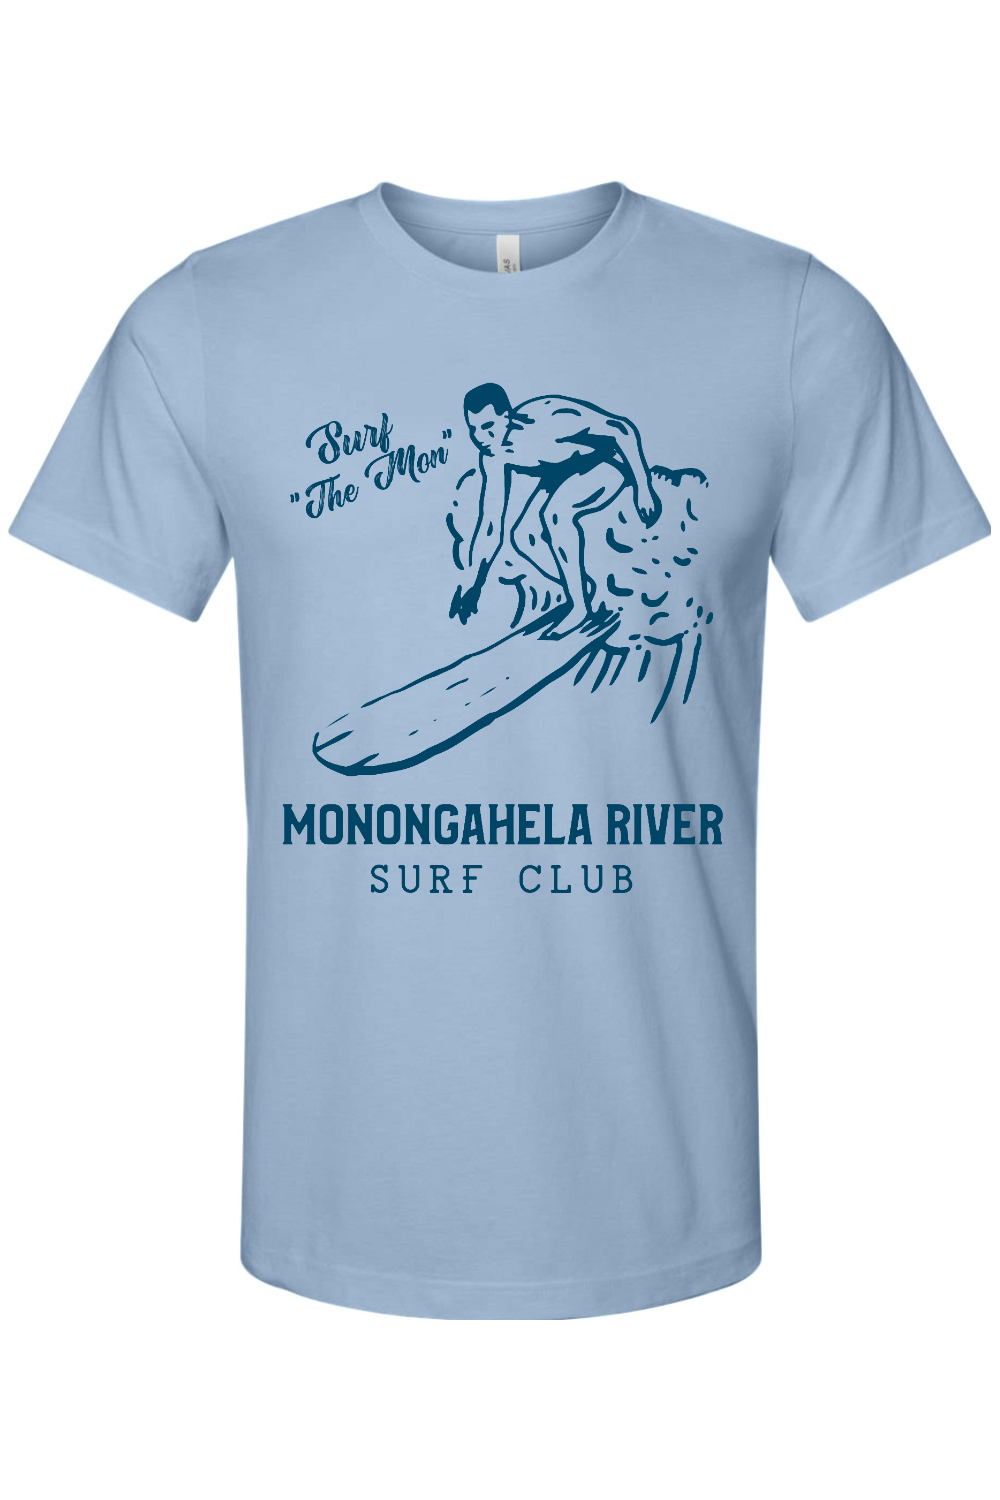 Monongahela River Surf Club - Bella + Canvas Jersey Tee - Yinzylvania